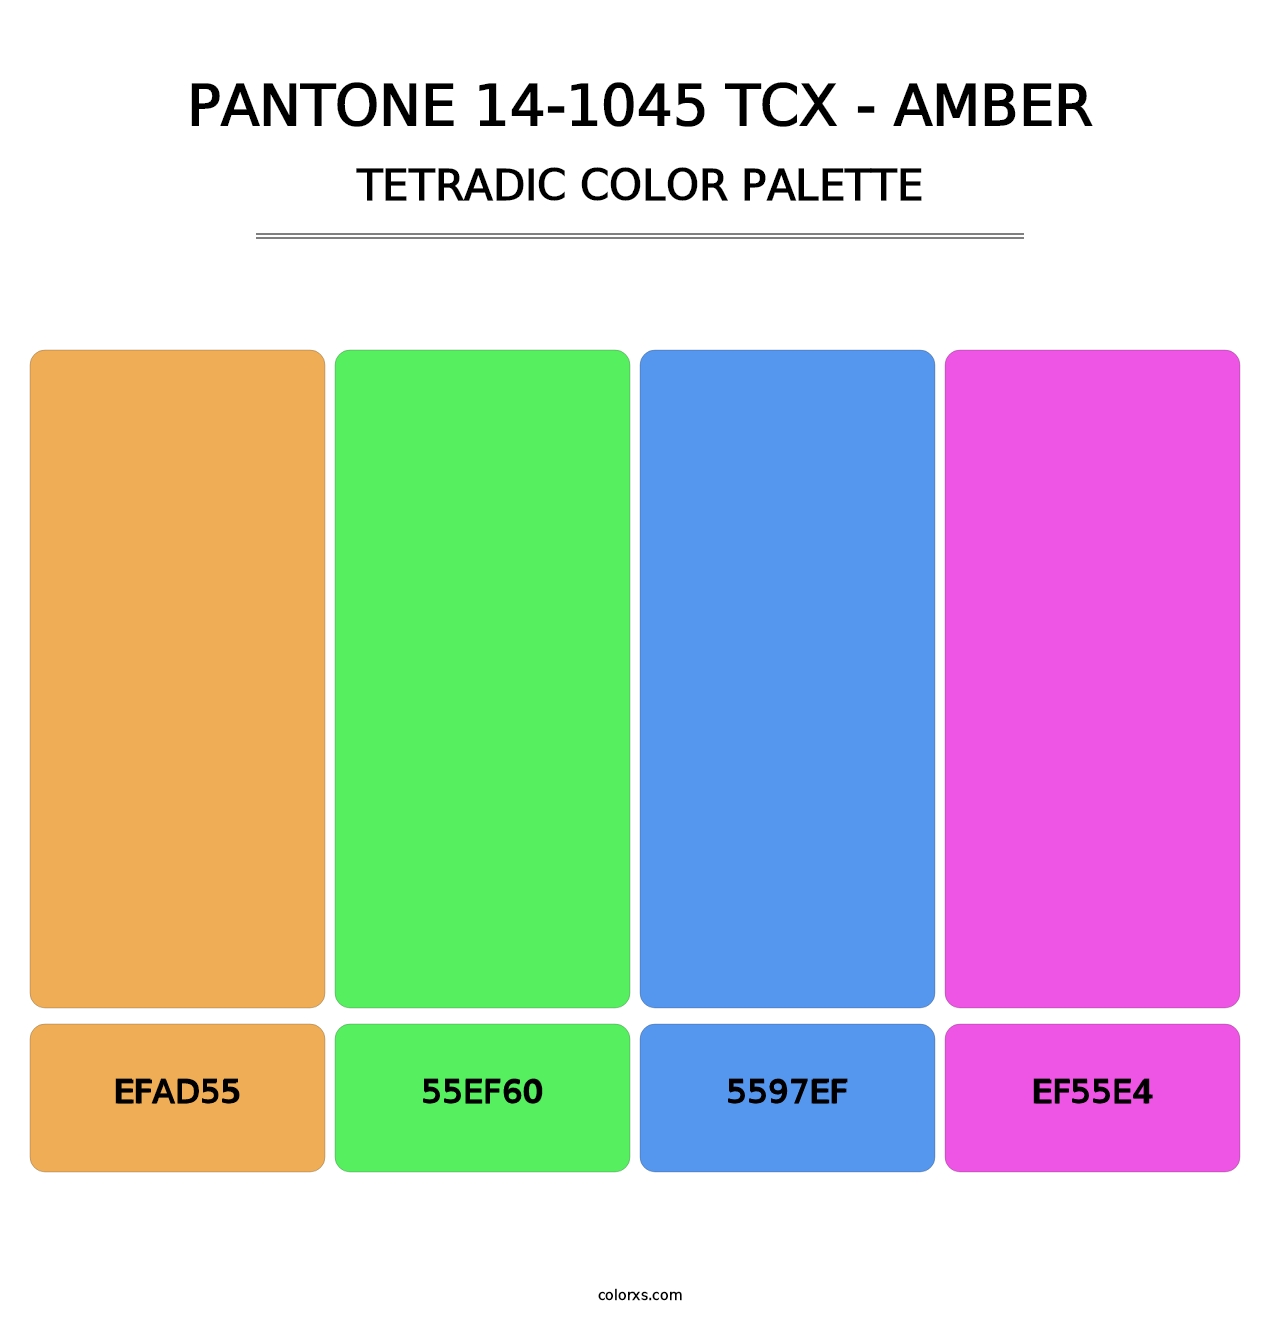 PANTONE 14-1045 TCX - Amber - Tetradic Color Palette